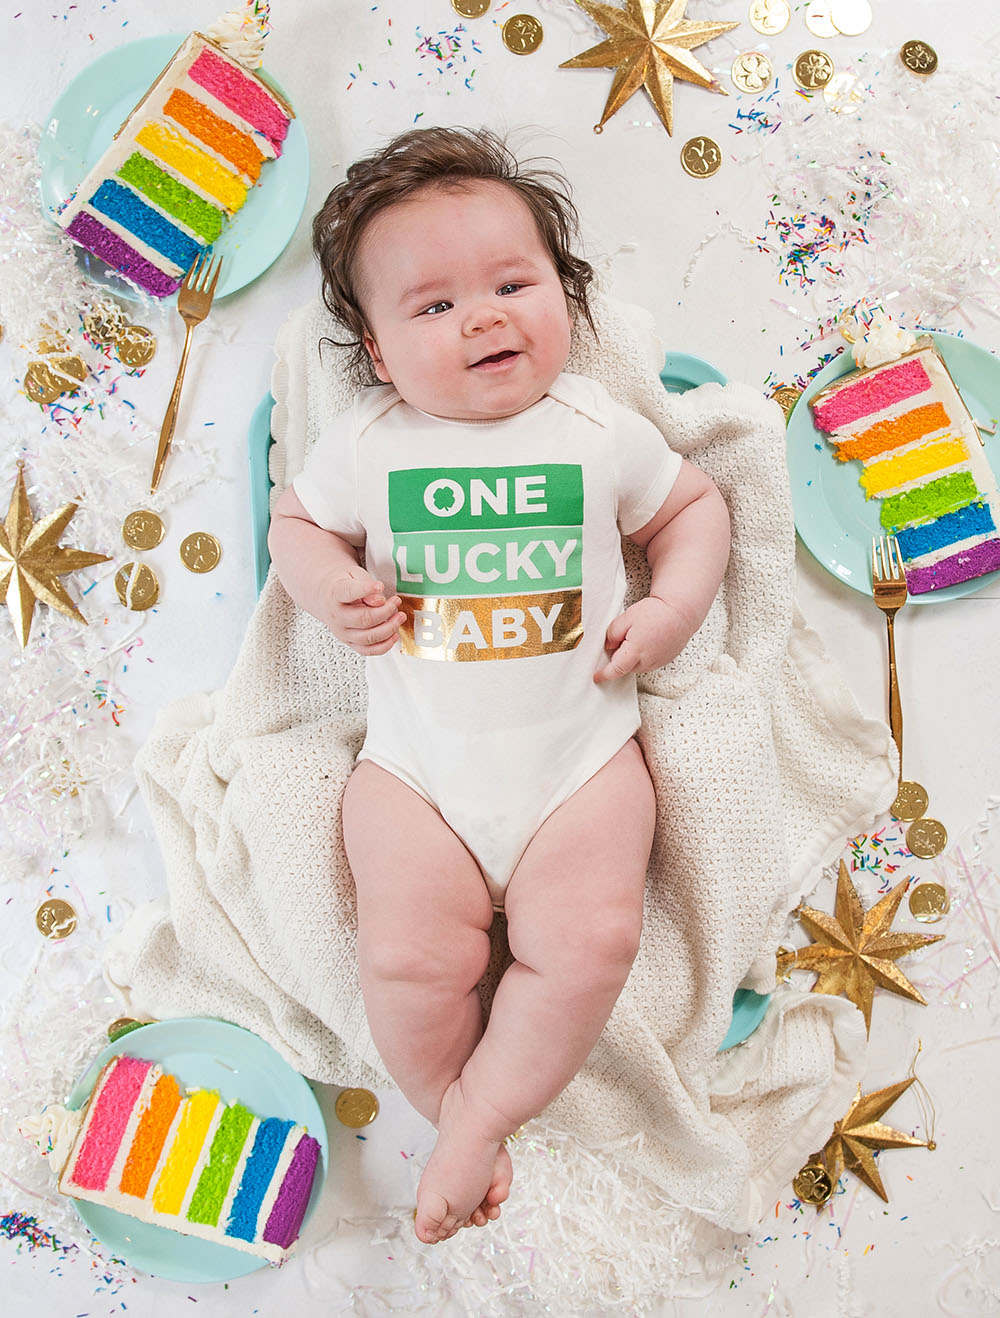 6 month old baby boy on white background with rainbow cake slices around him